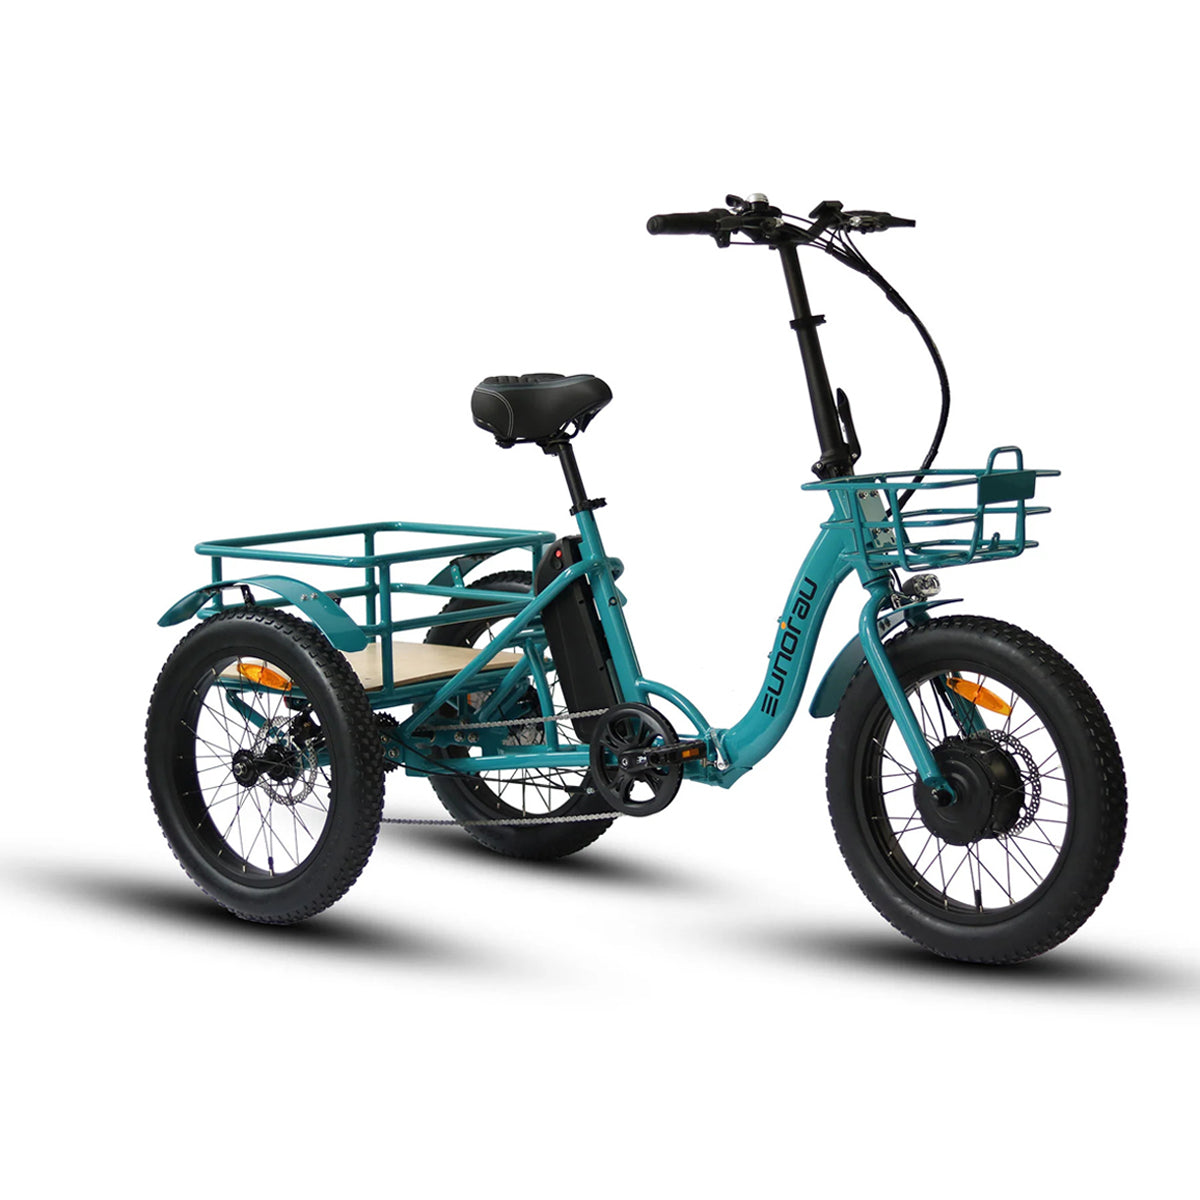 Eunorau 750 watt peak Trike, 440 LBS weight capacity